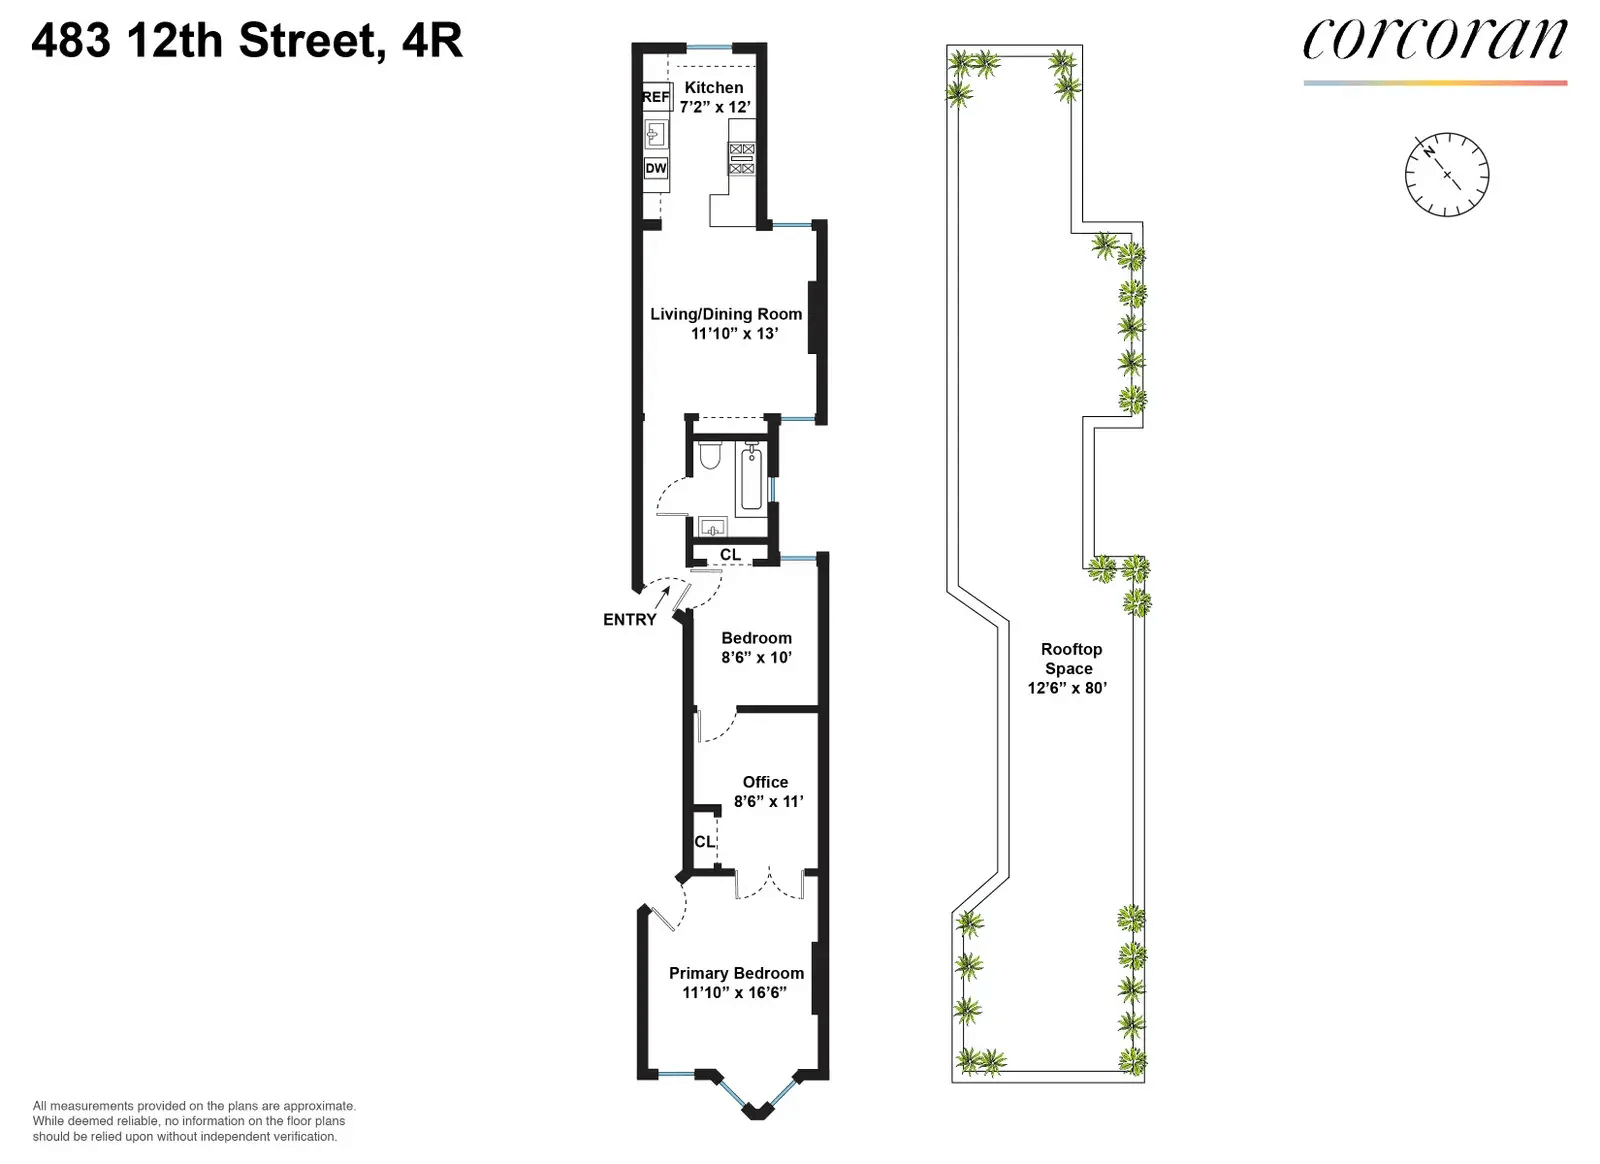 floorplan of apt 4r at 483 12th street